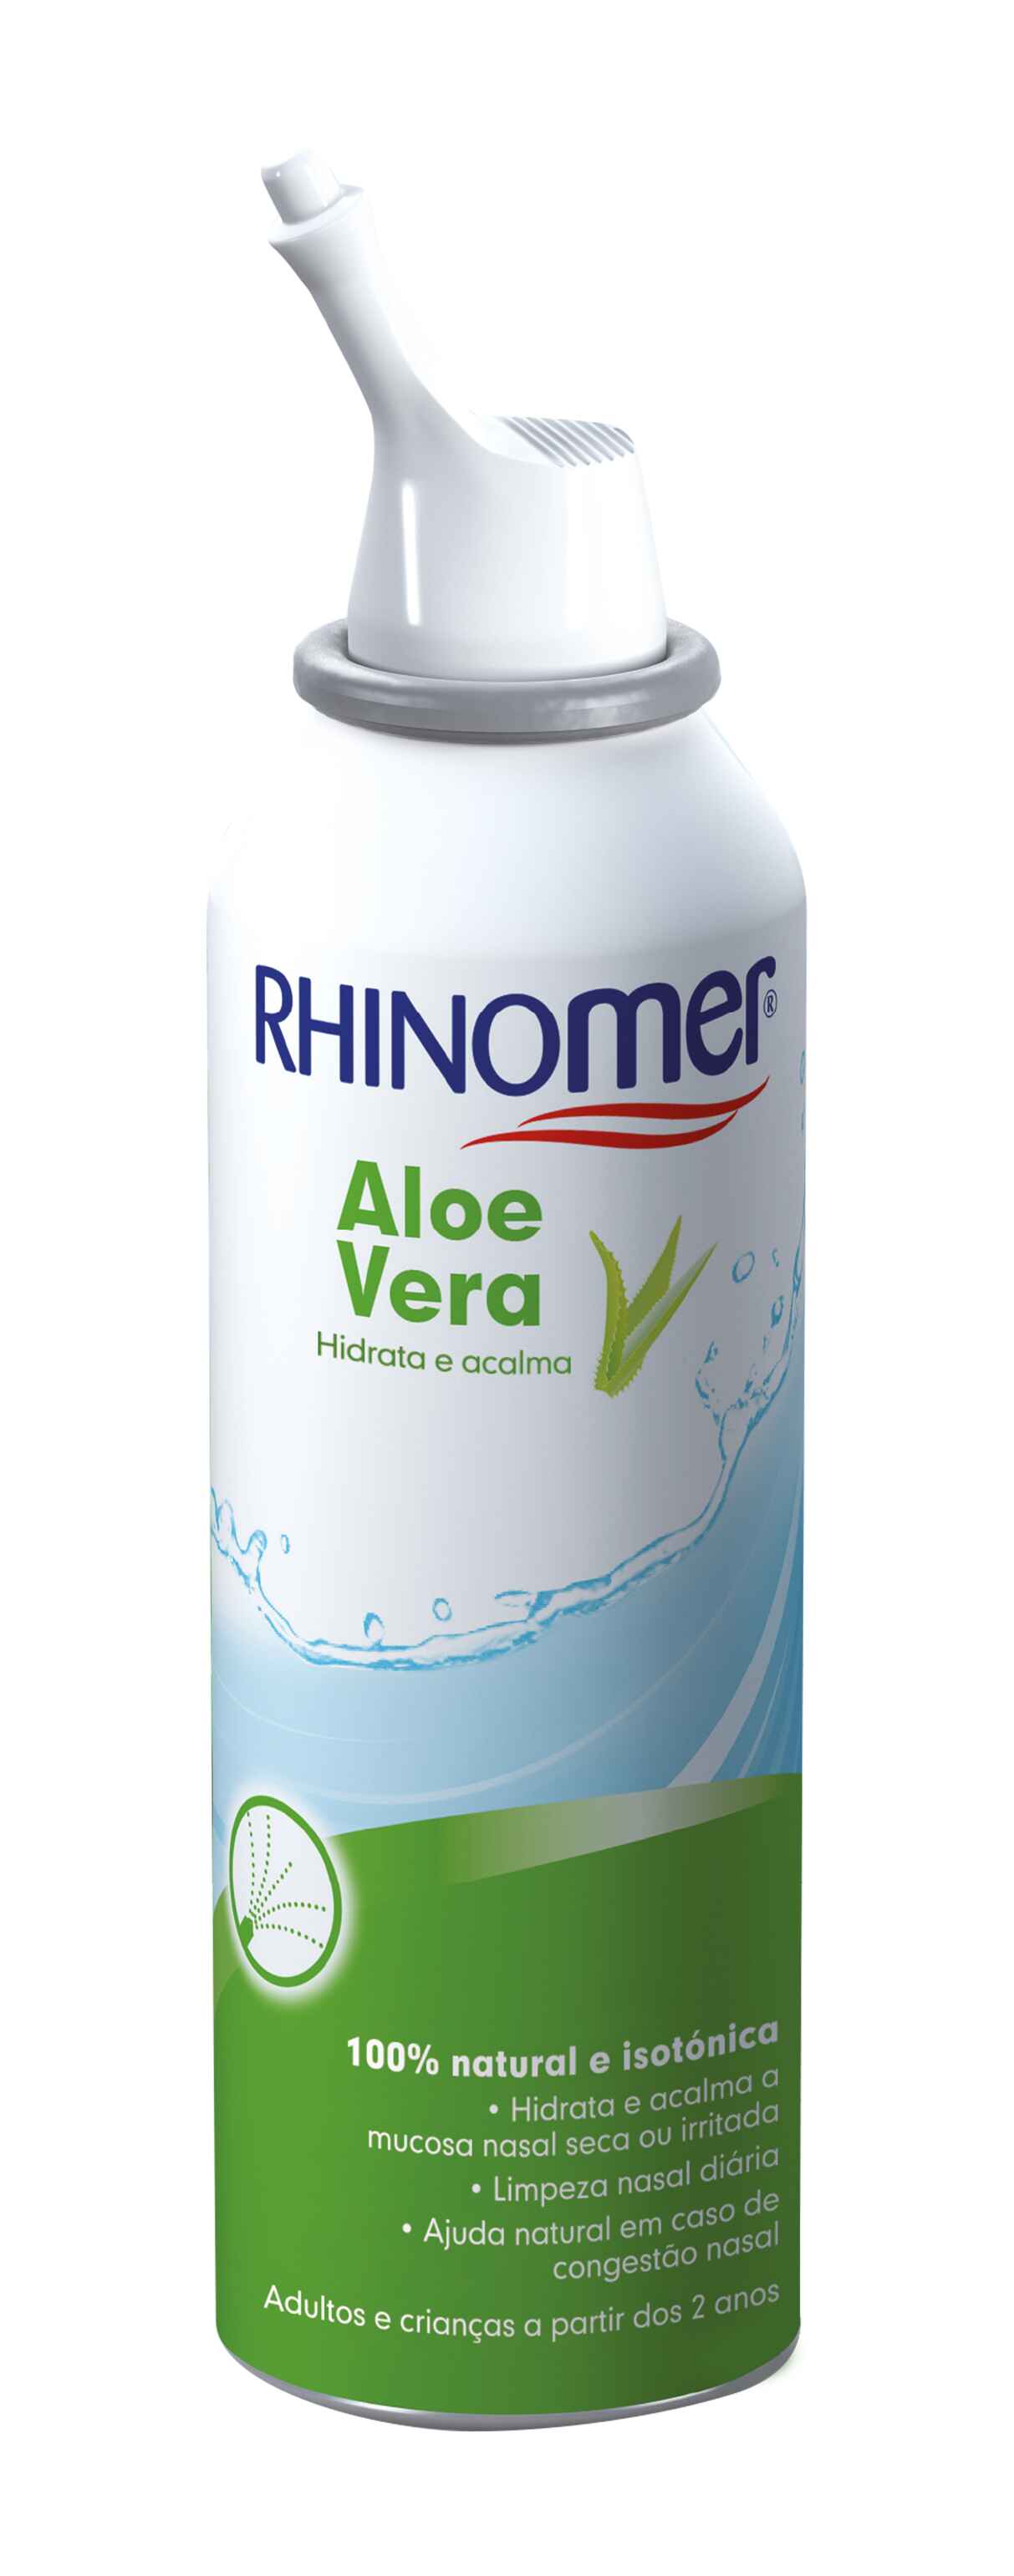 Rhinomer Agua de Mar Aloe Vera Spray Nasal 100 ml